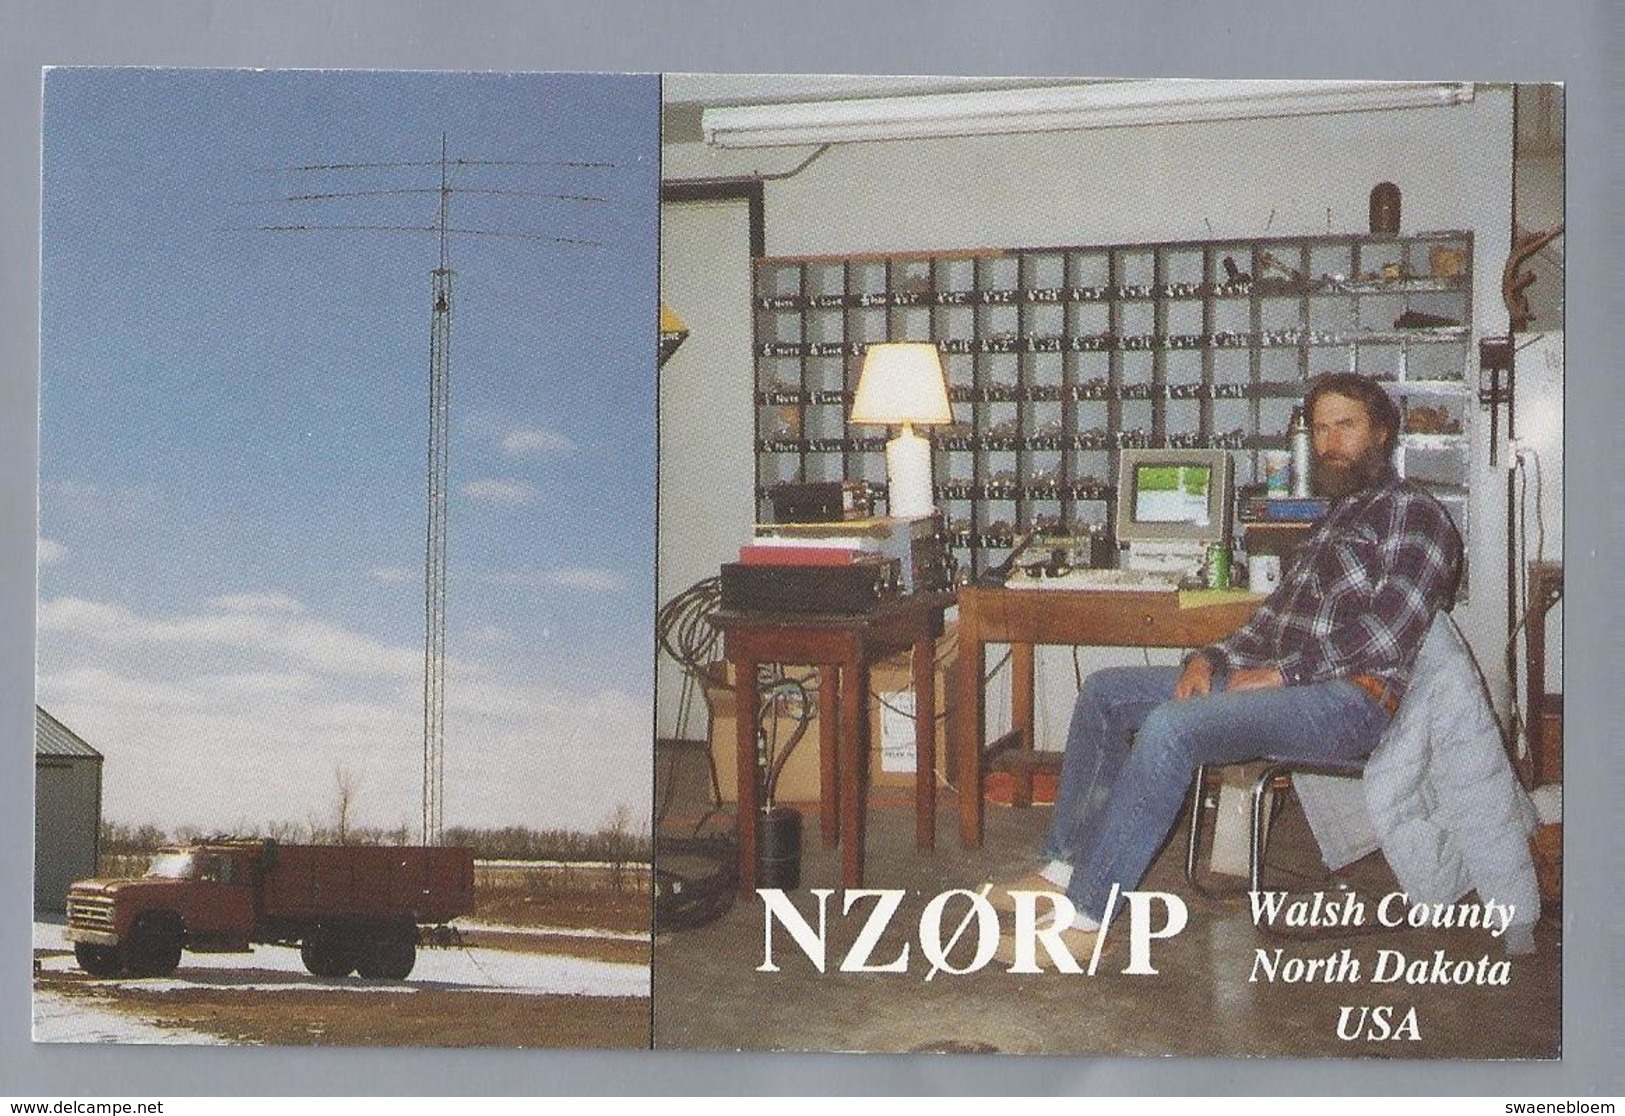 US.- QSL KAART. CARD. NZOR/P Walsh County, Warsaw, North Dakota, USA. Op: David Willis, Thief River Falls. - Radio-amateur